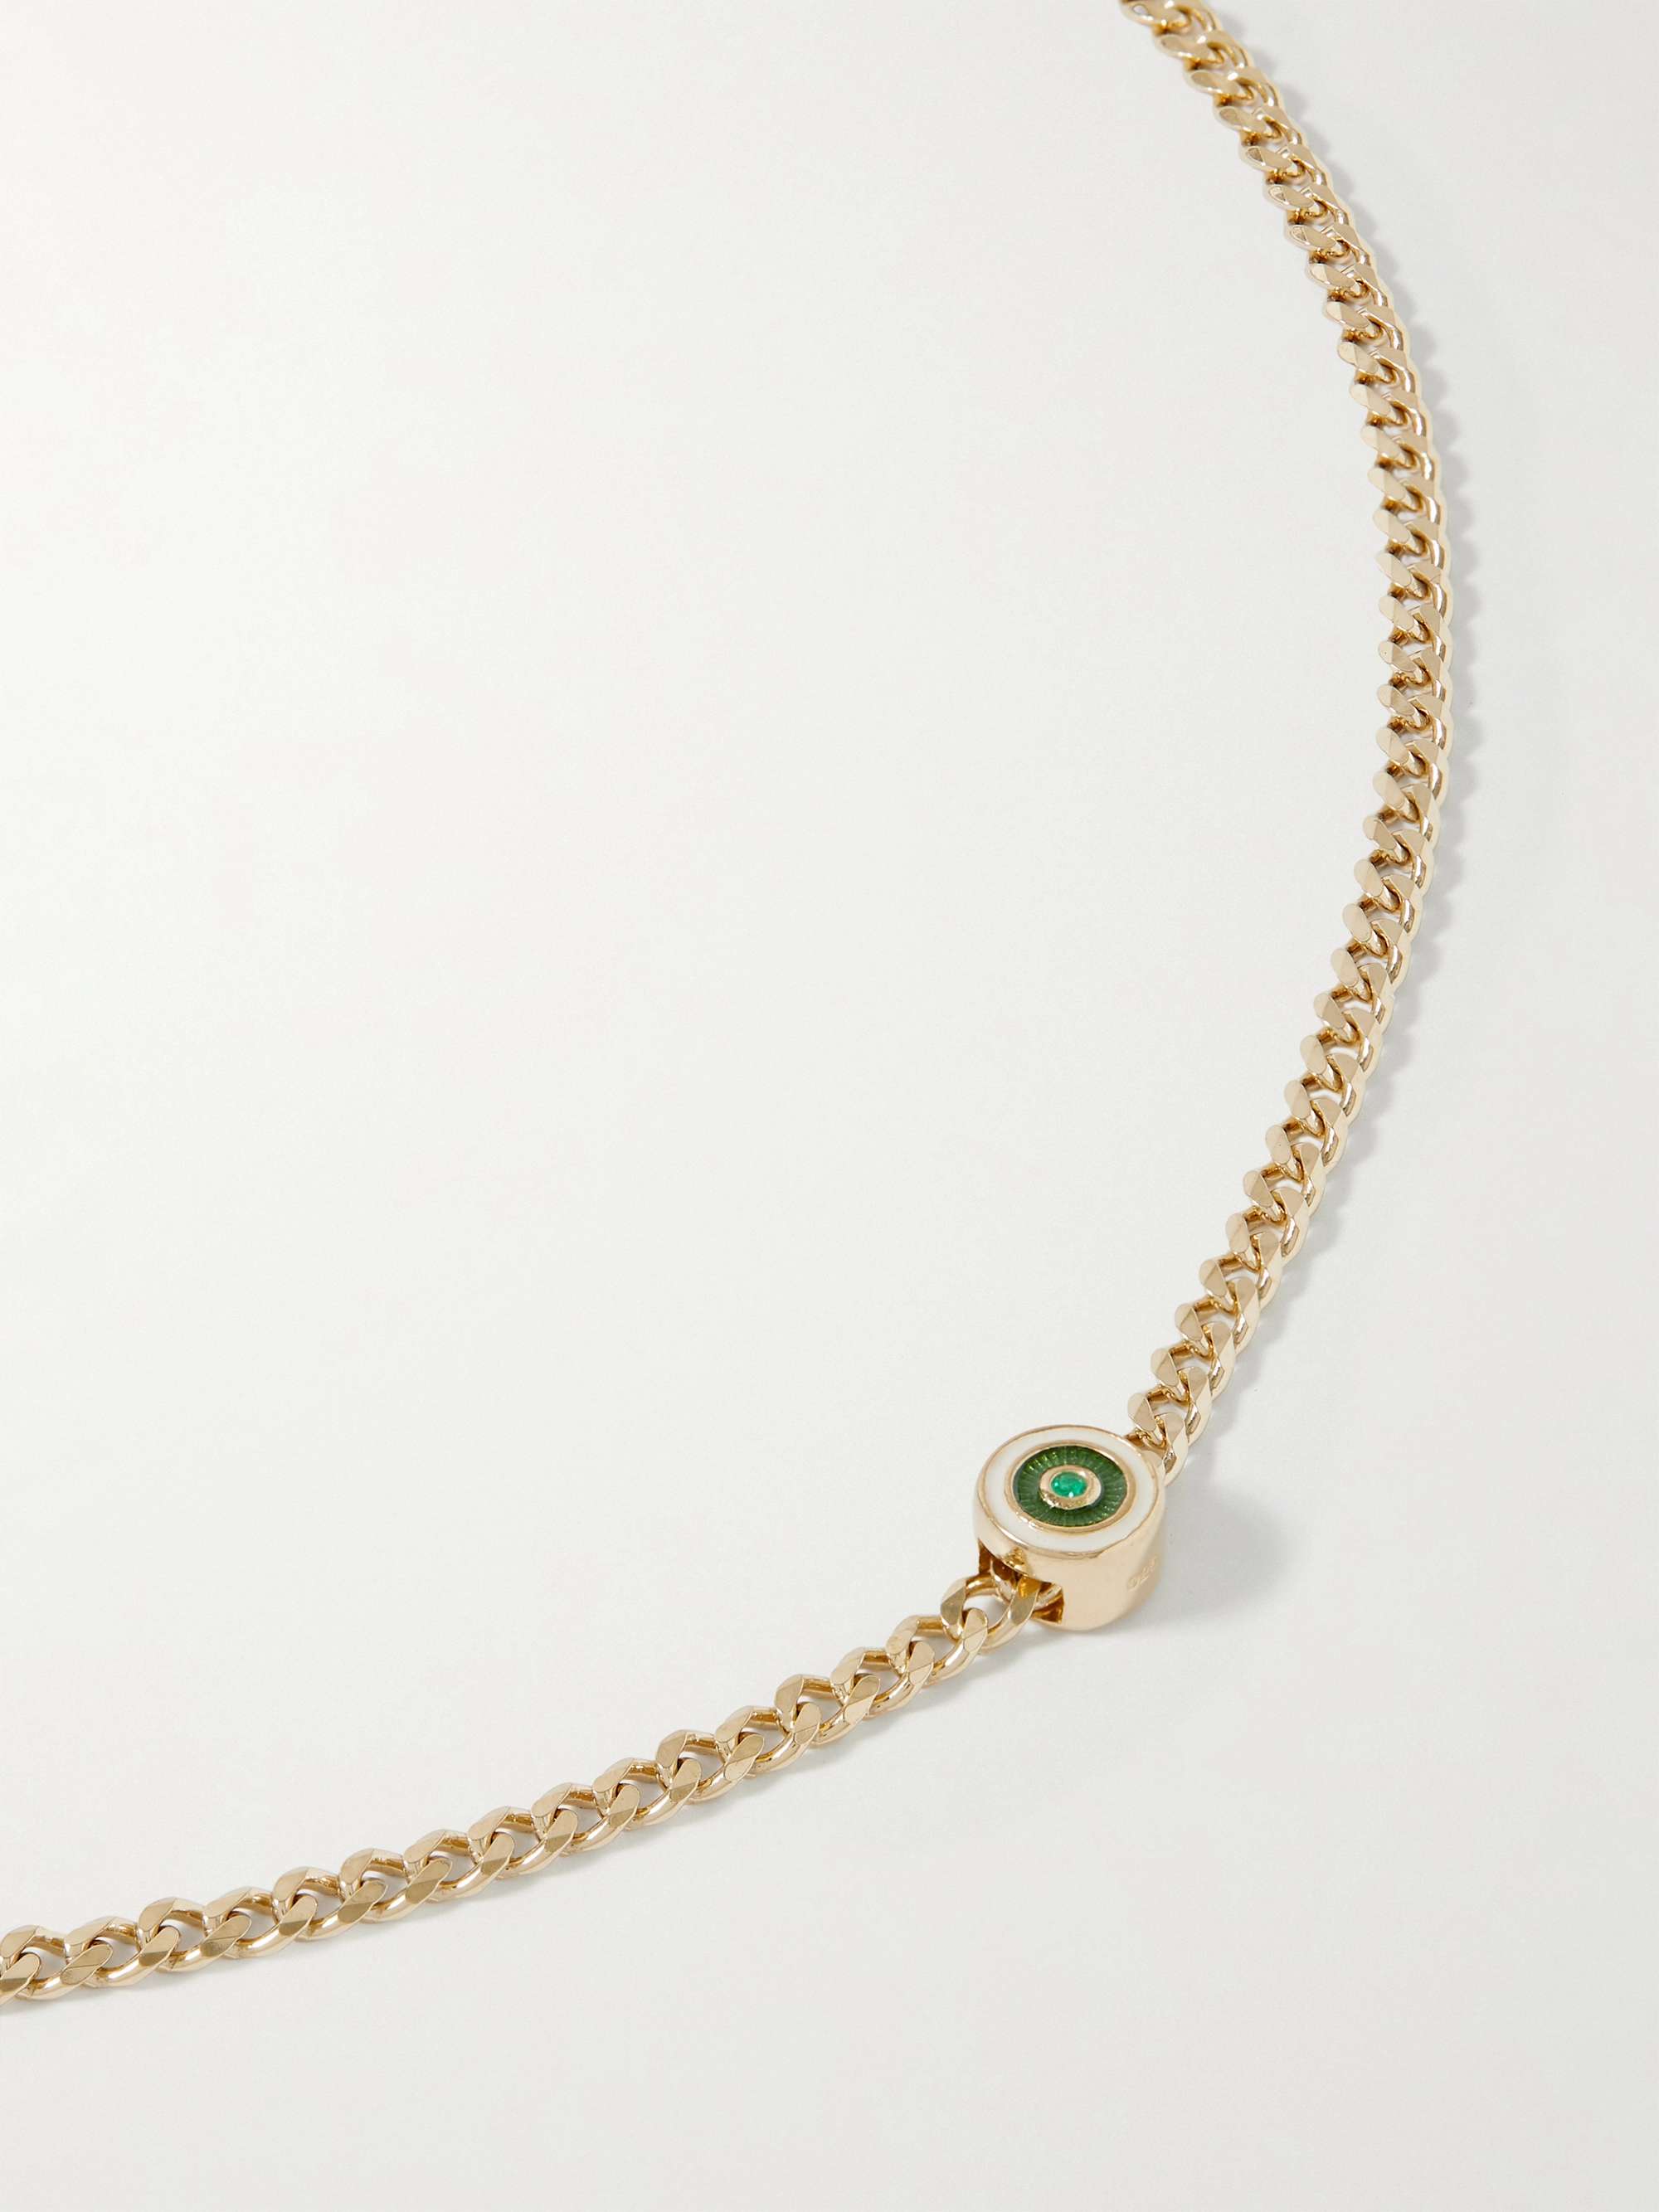 MIANSAI Opus Gold Vermeil, Enamel and Chalcedony Pendant Necklace